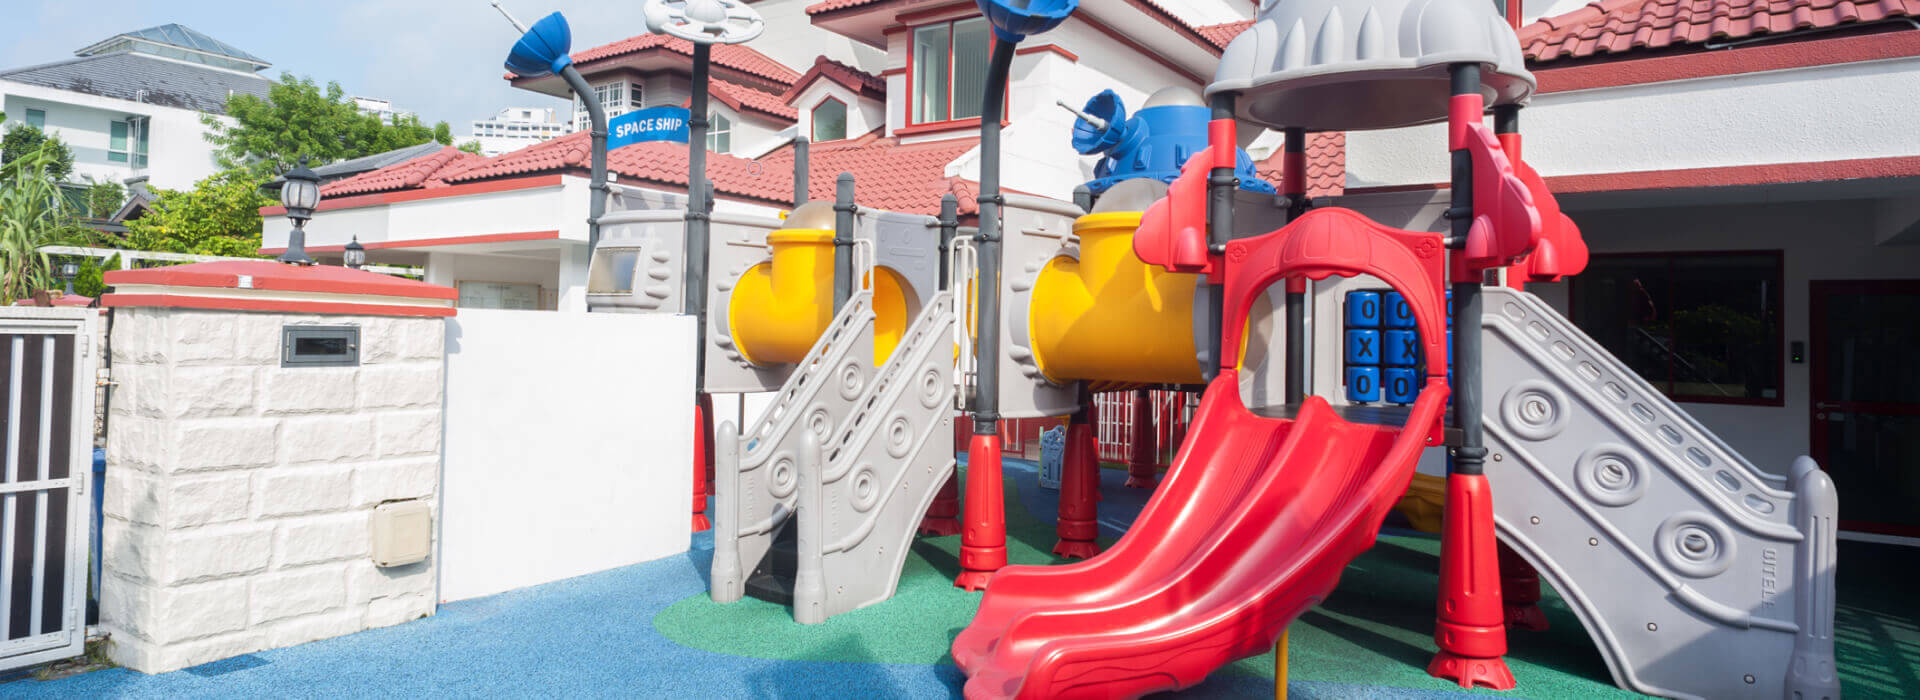 Raffles Kidz @ Bukit Panjang | Best Child Care Singapore | Outdoor Playground